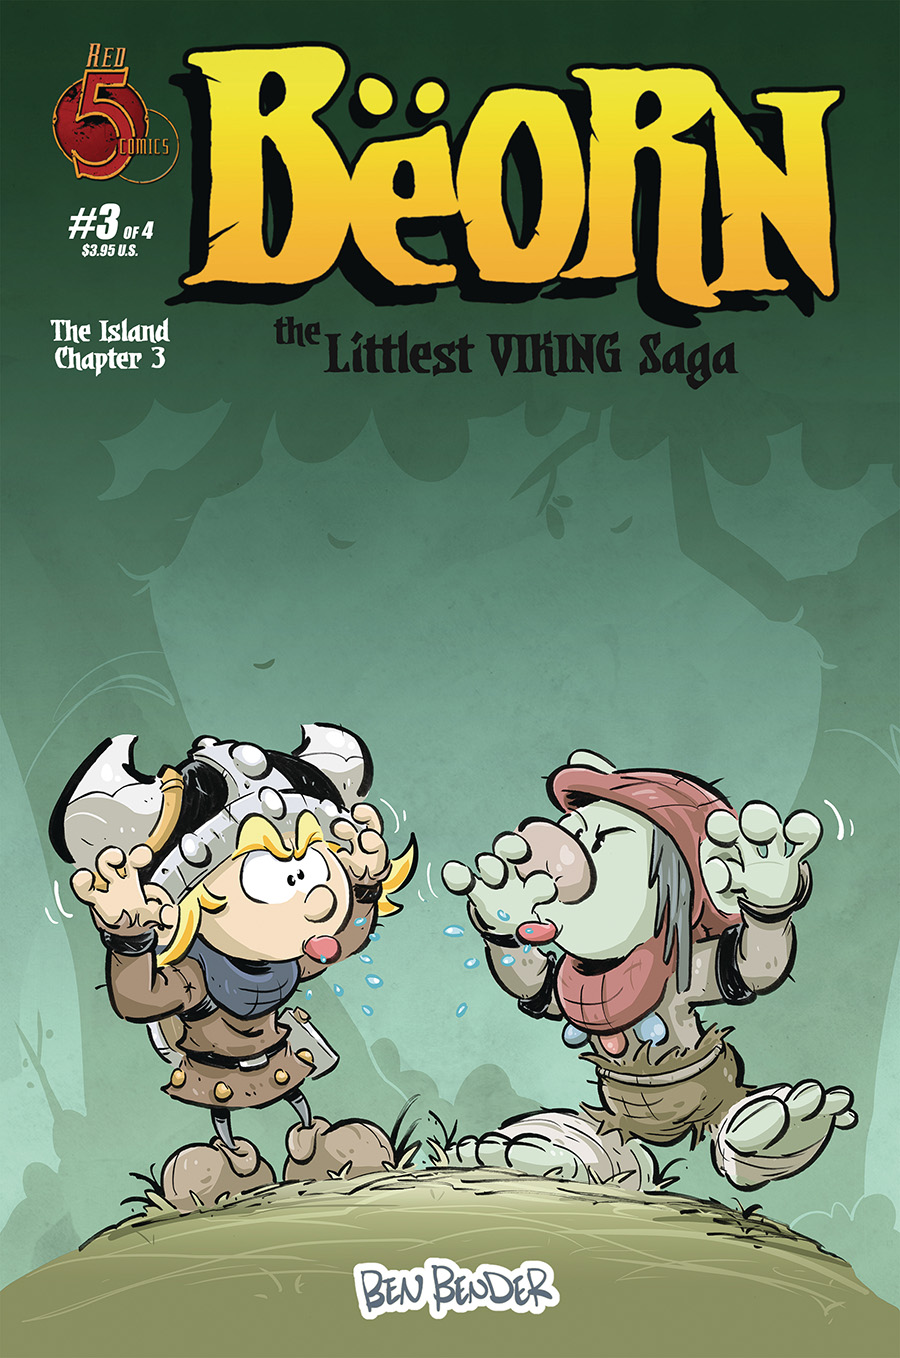 Beorn Littlest Viking Saga #3